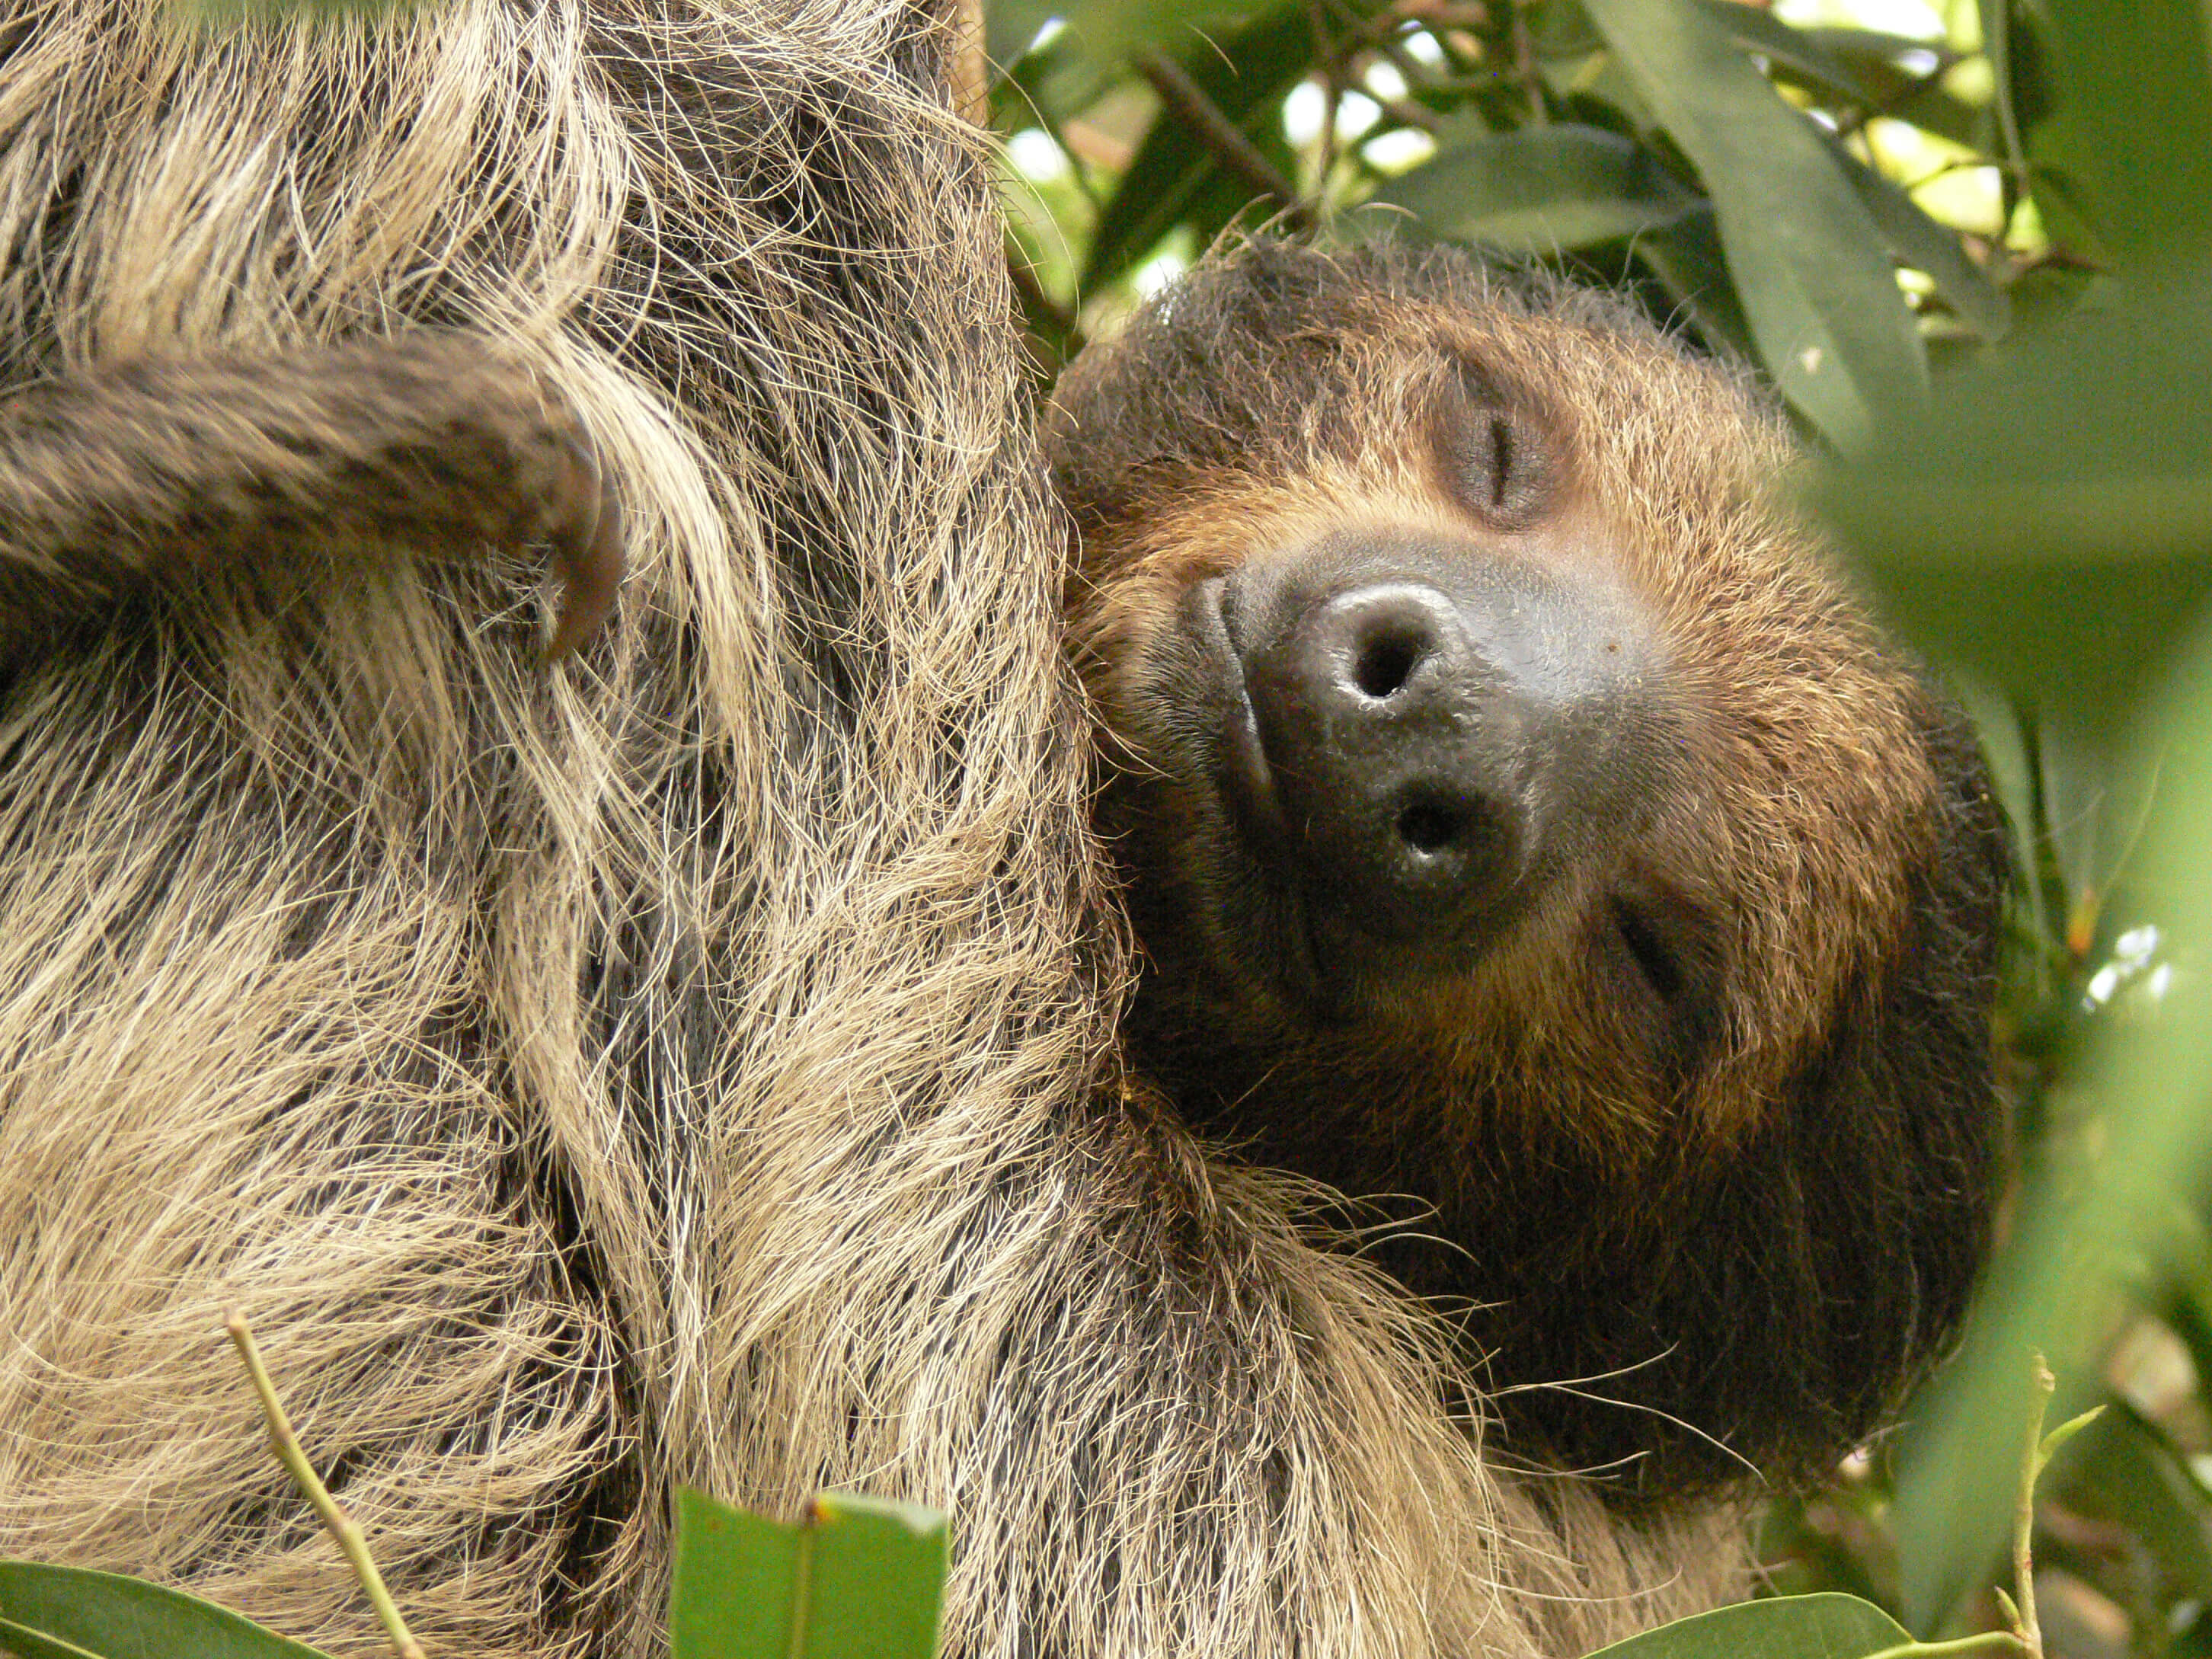 A sloth sleeping among some green leaves